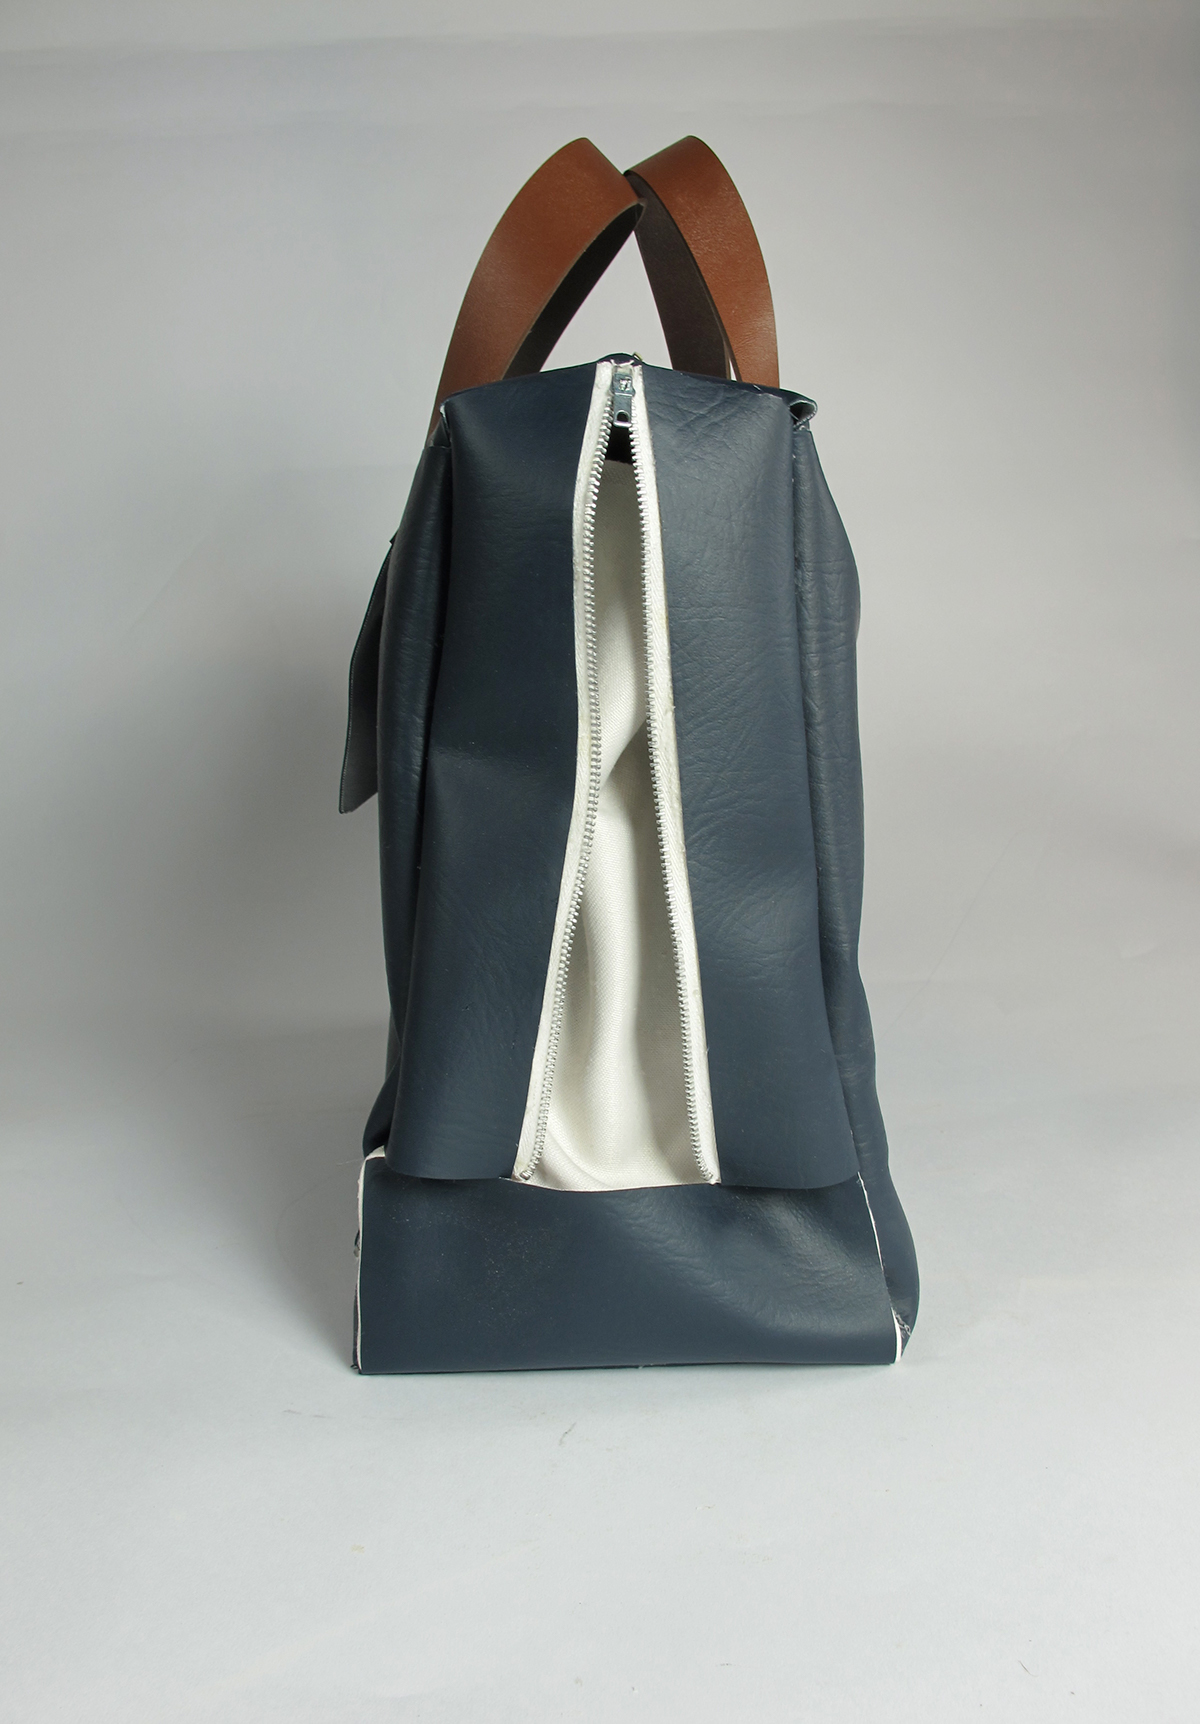 bag accessories design bag design travel bag accessories Travel travel accessories